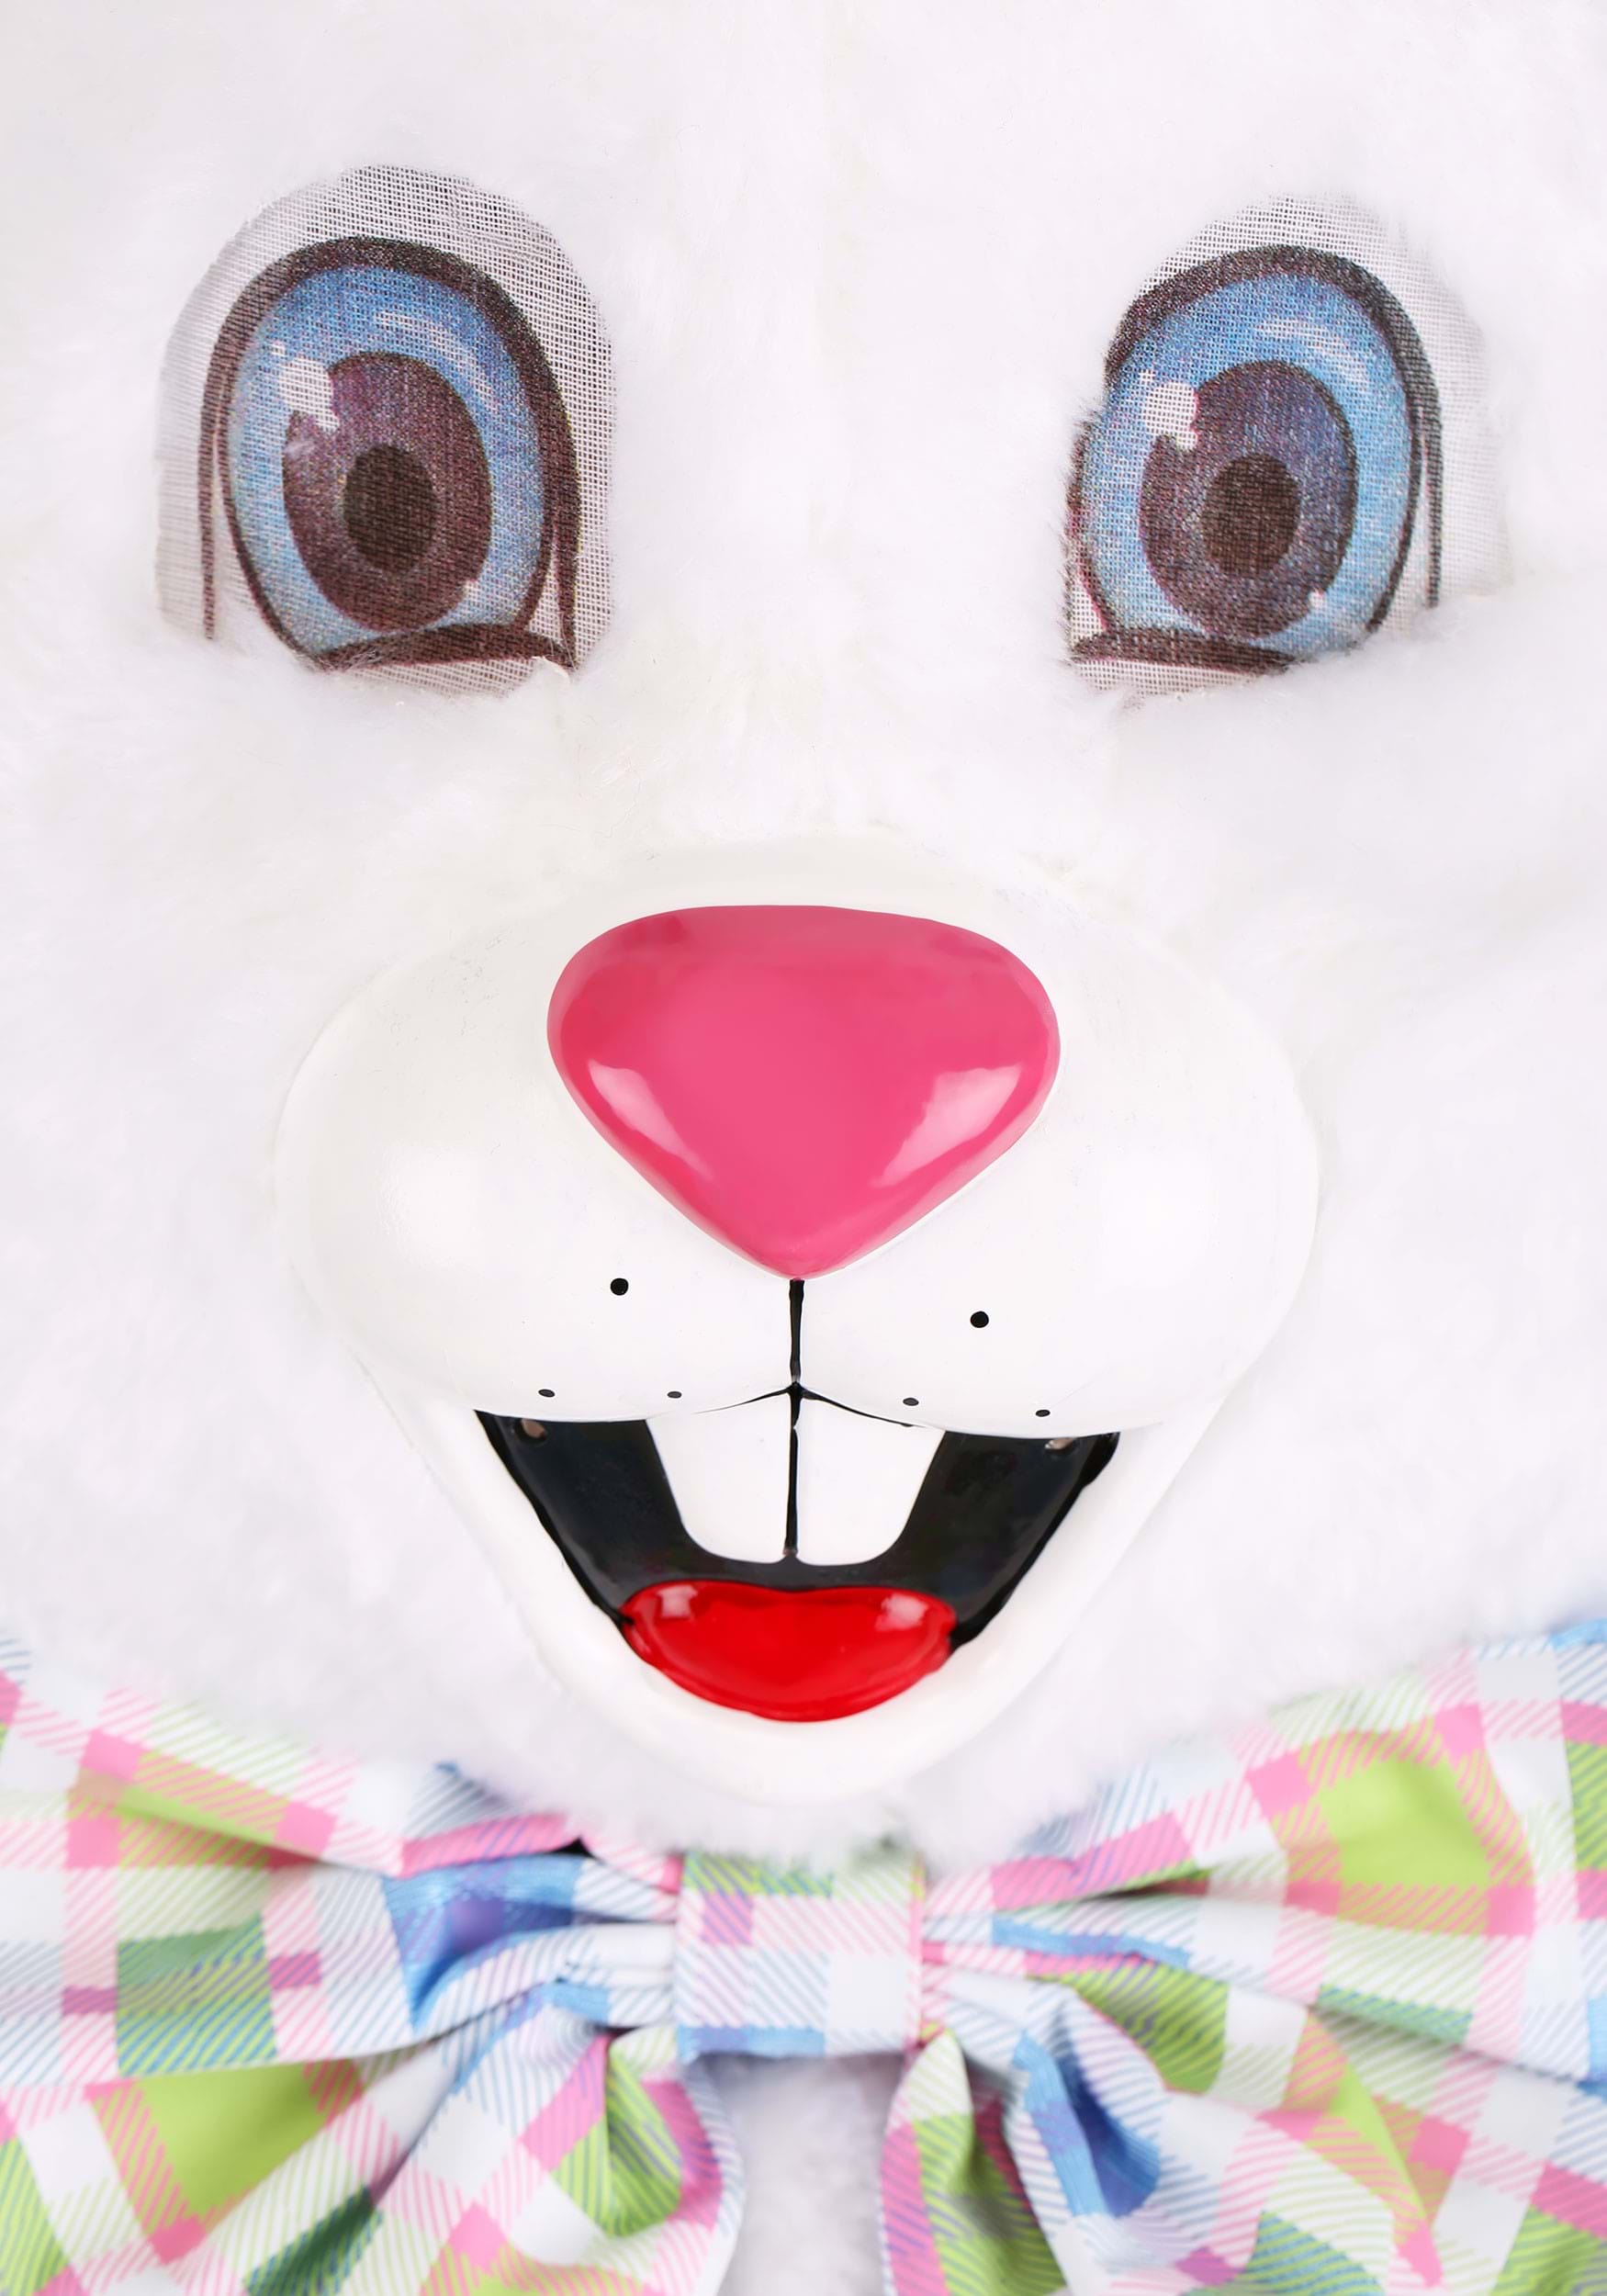 Deluxe Easter Bunny Fancy Dress Costume